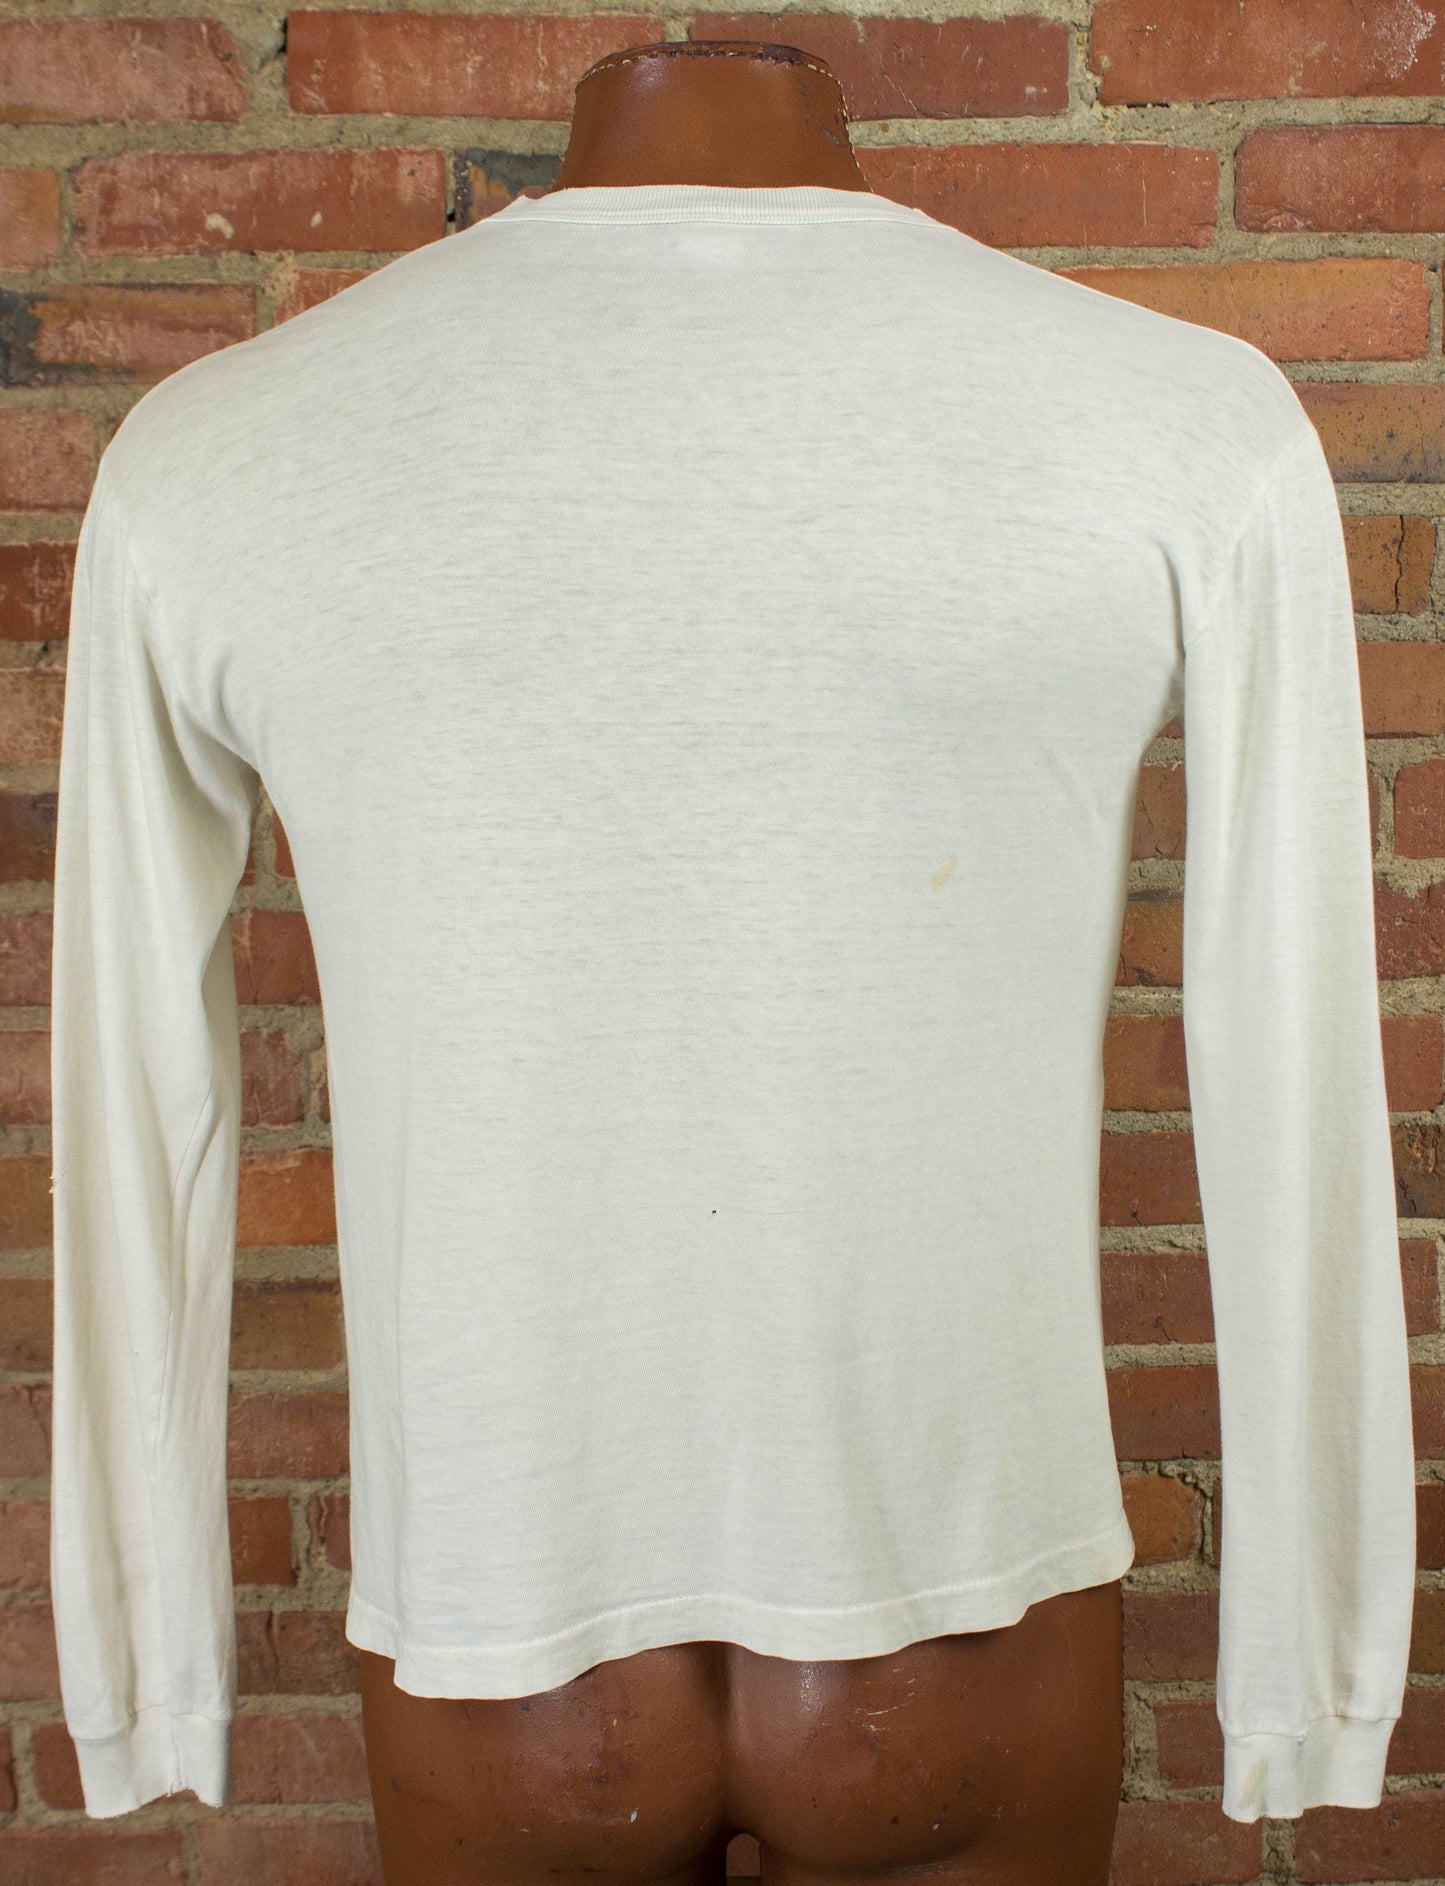 Vintage Ramones Concert T Shirt 1979 Rock N Roll High School Movie Promo White Long Sleeve Medium